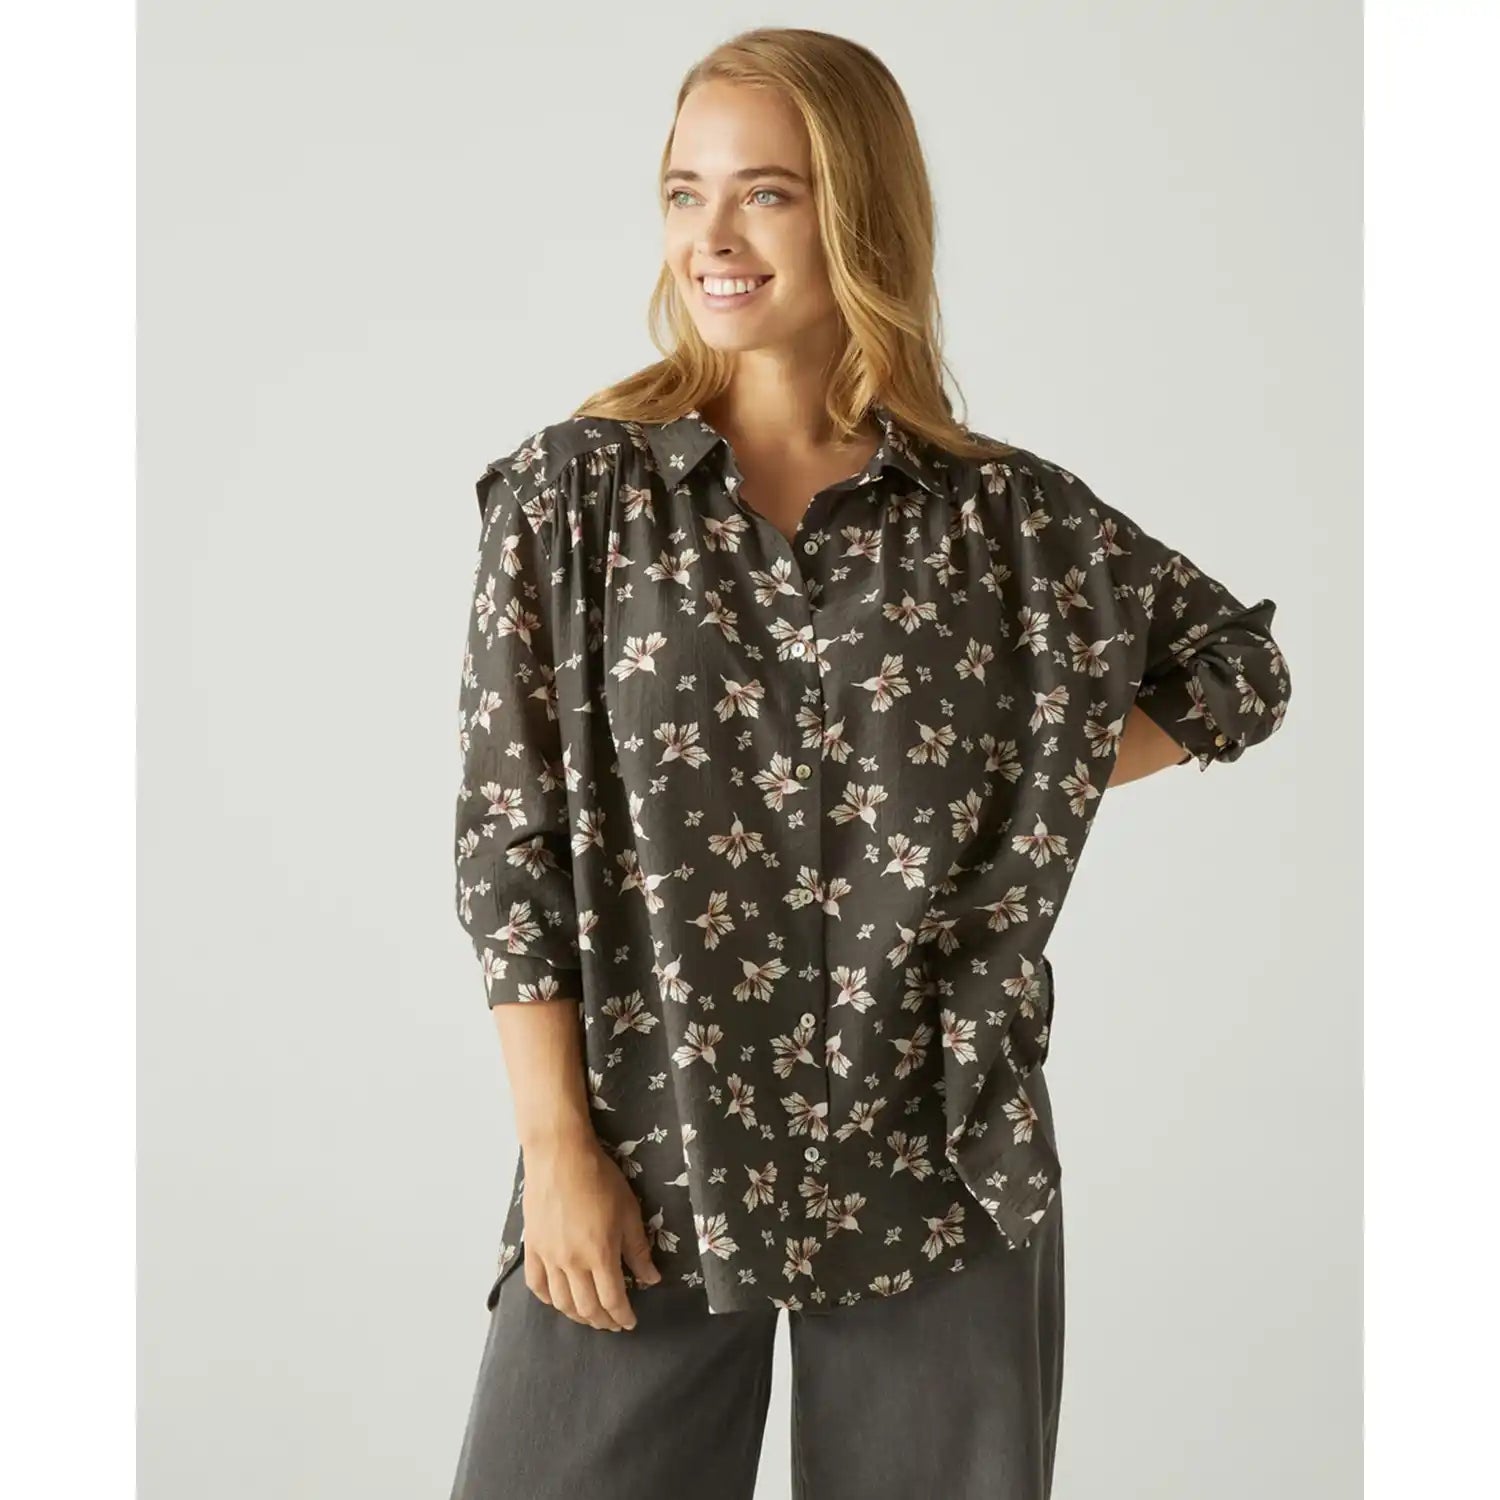 Couchel Flowers Print Shirt - Multi Grey 1 Shaws Department Stores